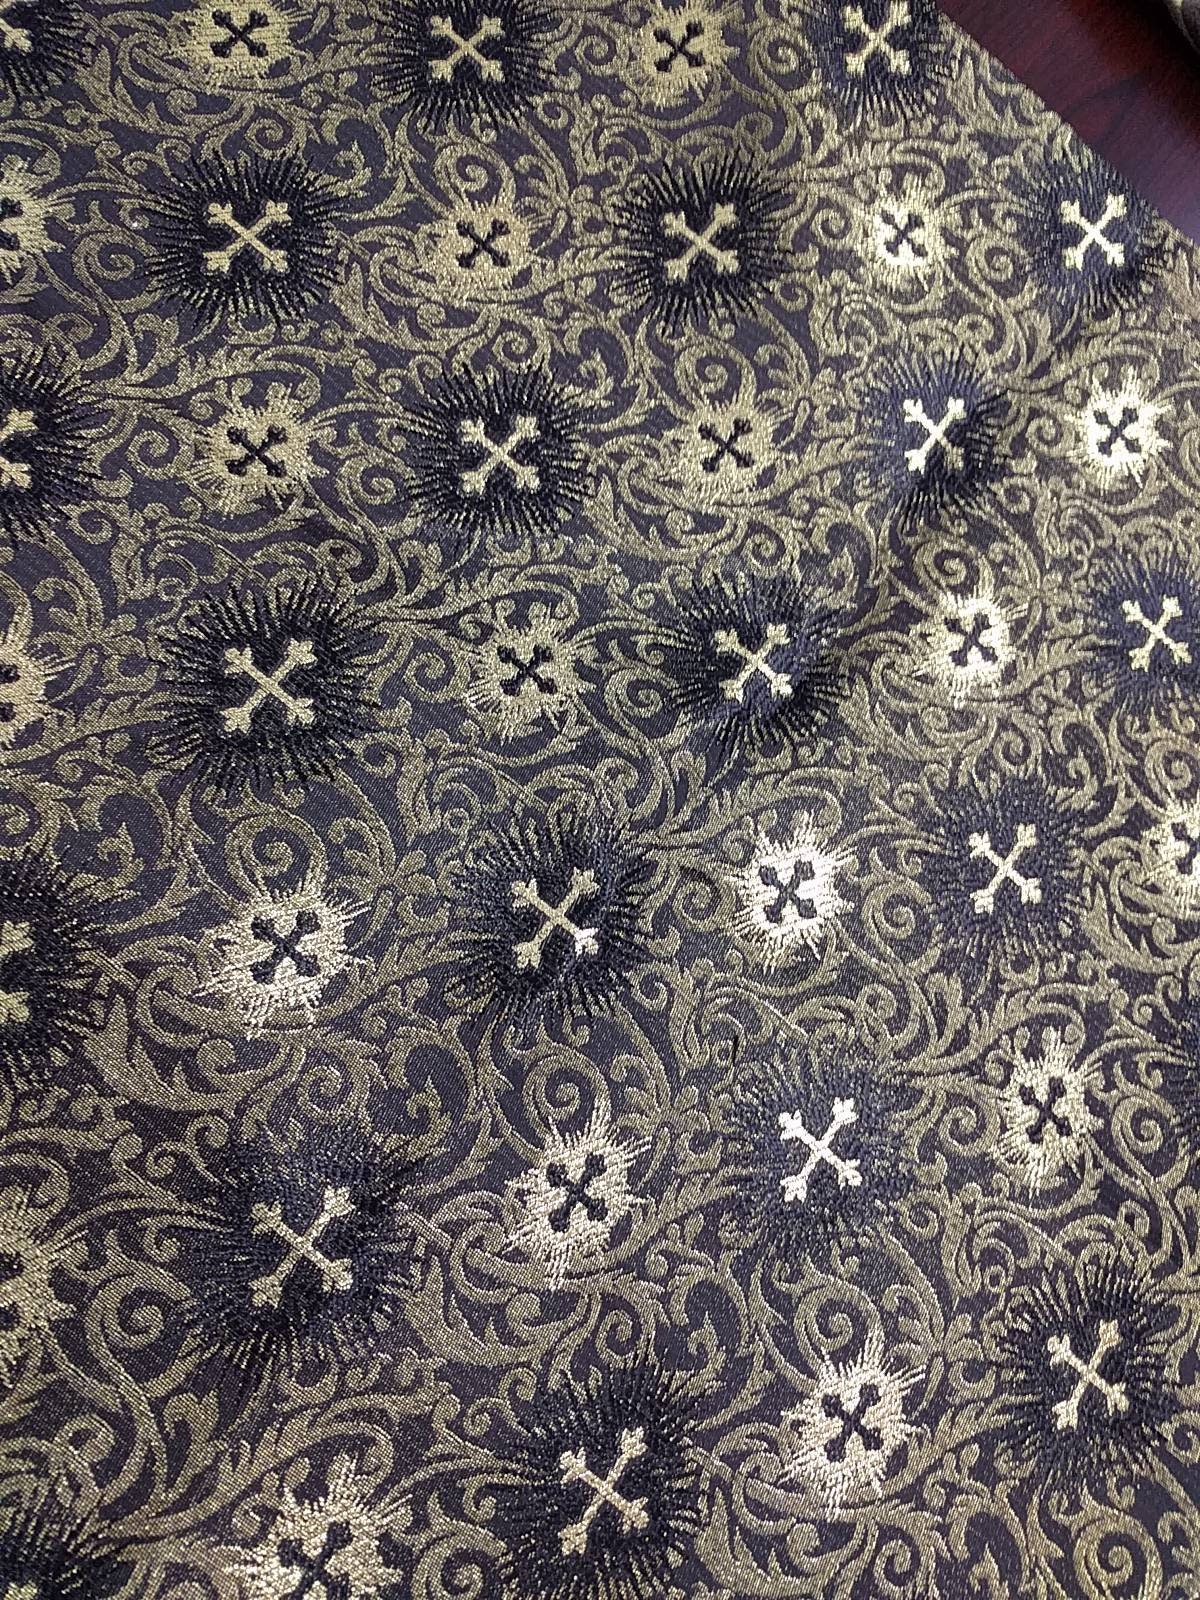 PURPLE SILVER Metallic Brocade Fabric By Yard Cross Filigree Religious  Victorian